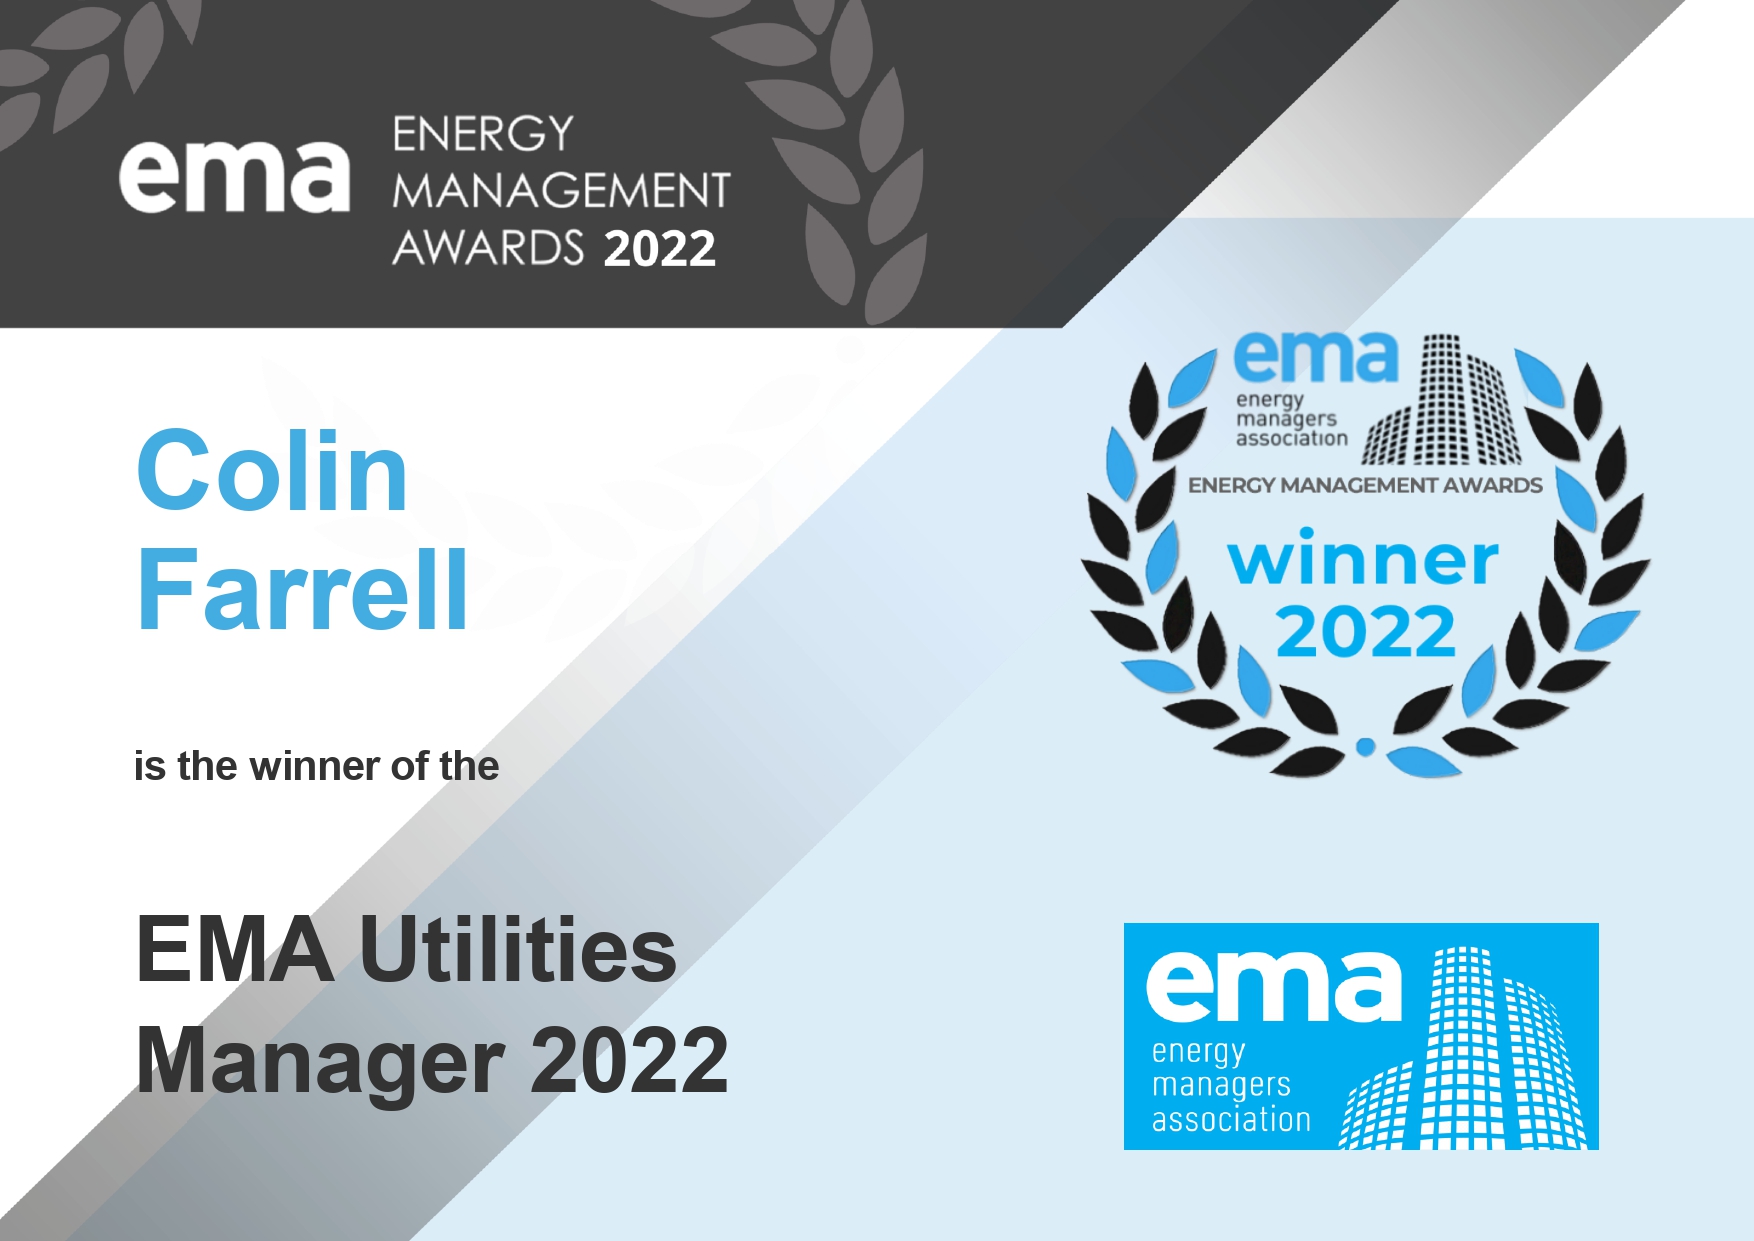 Winner Utilities Manager 2022 Colin Farrell